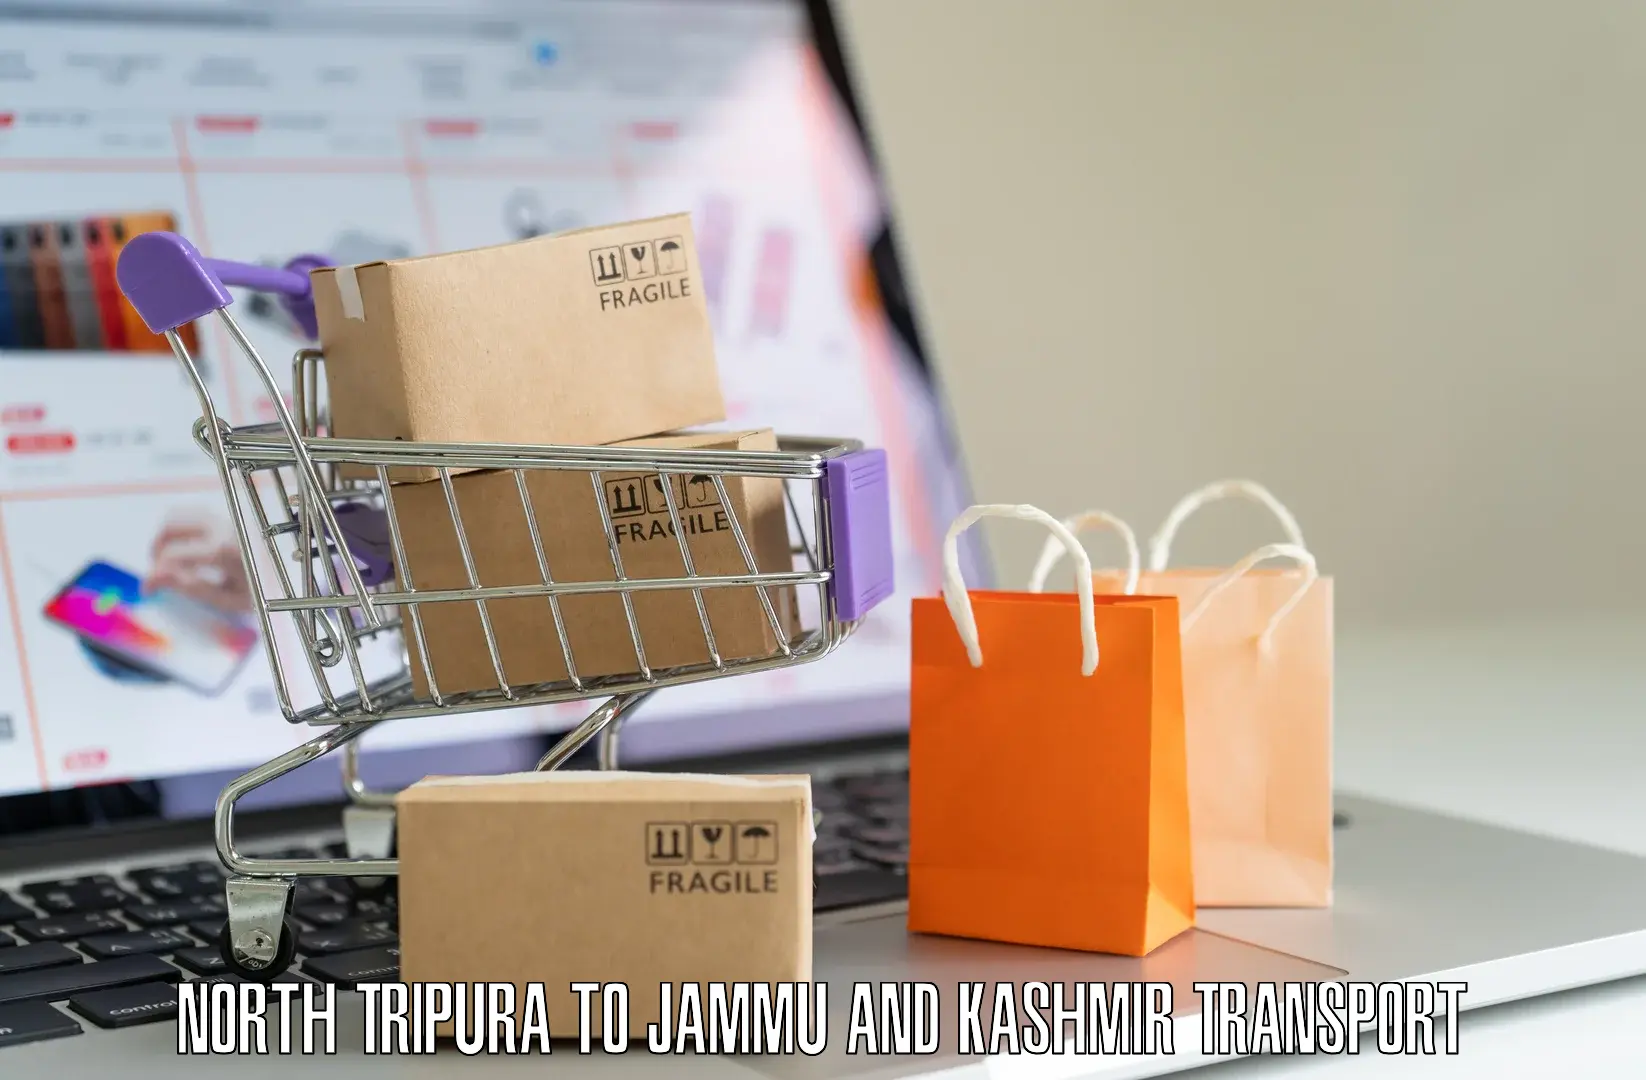 Furniture transport service North Tripura to Jammu